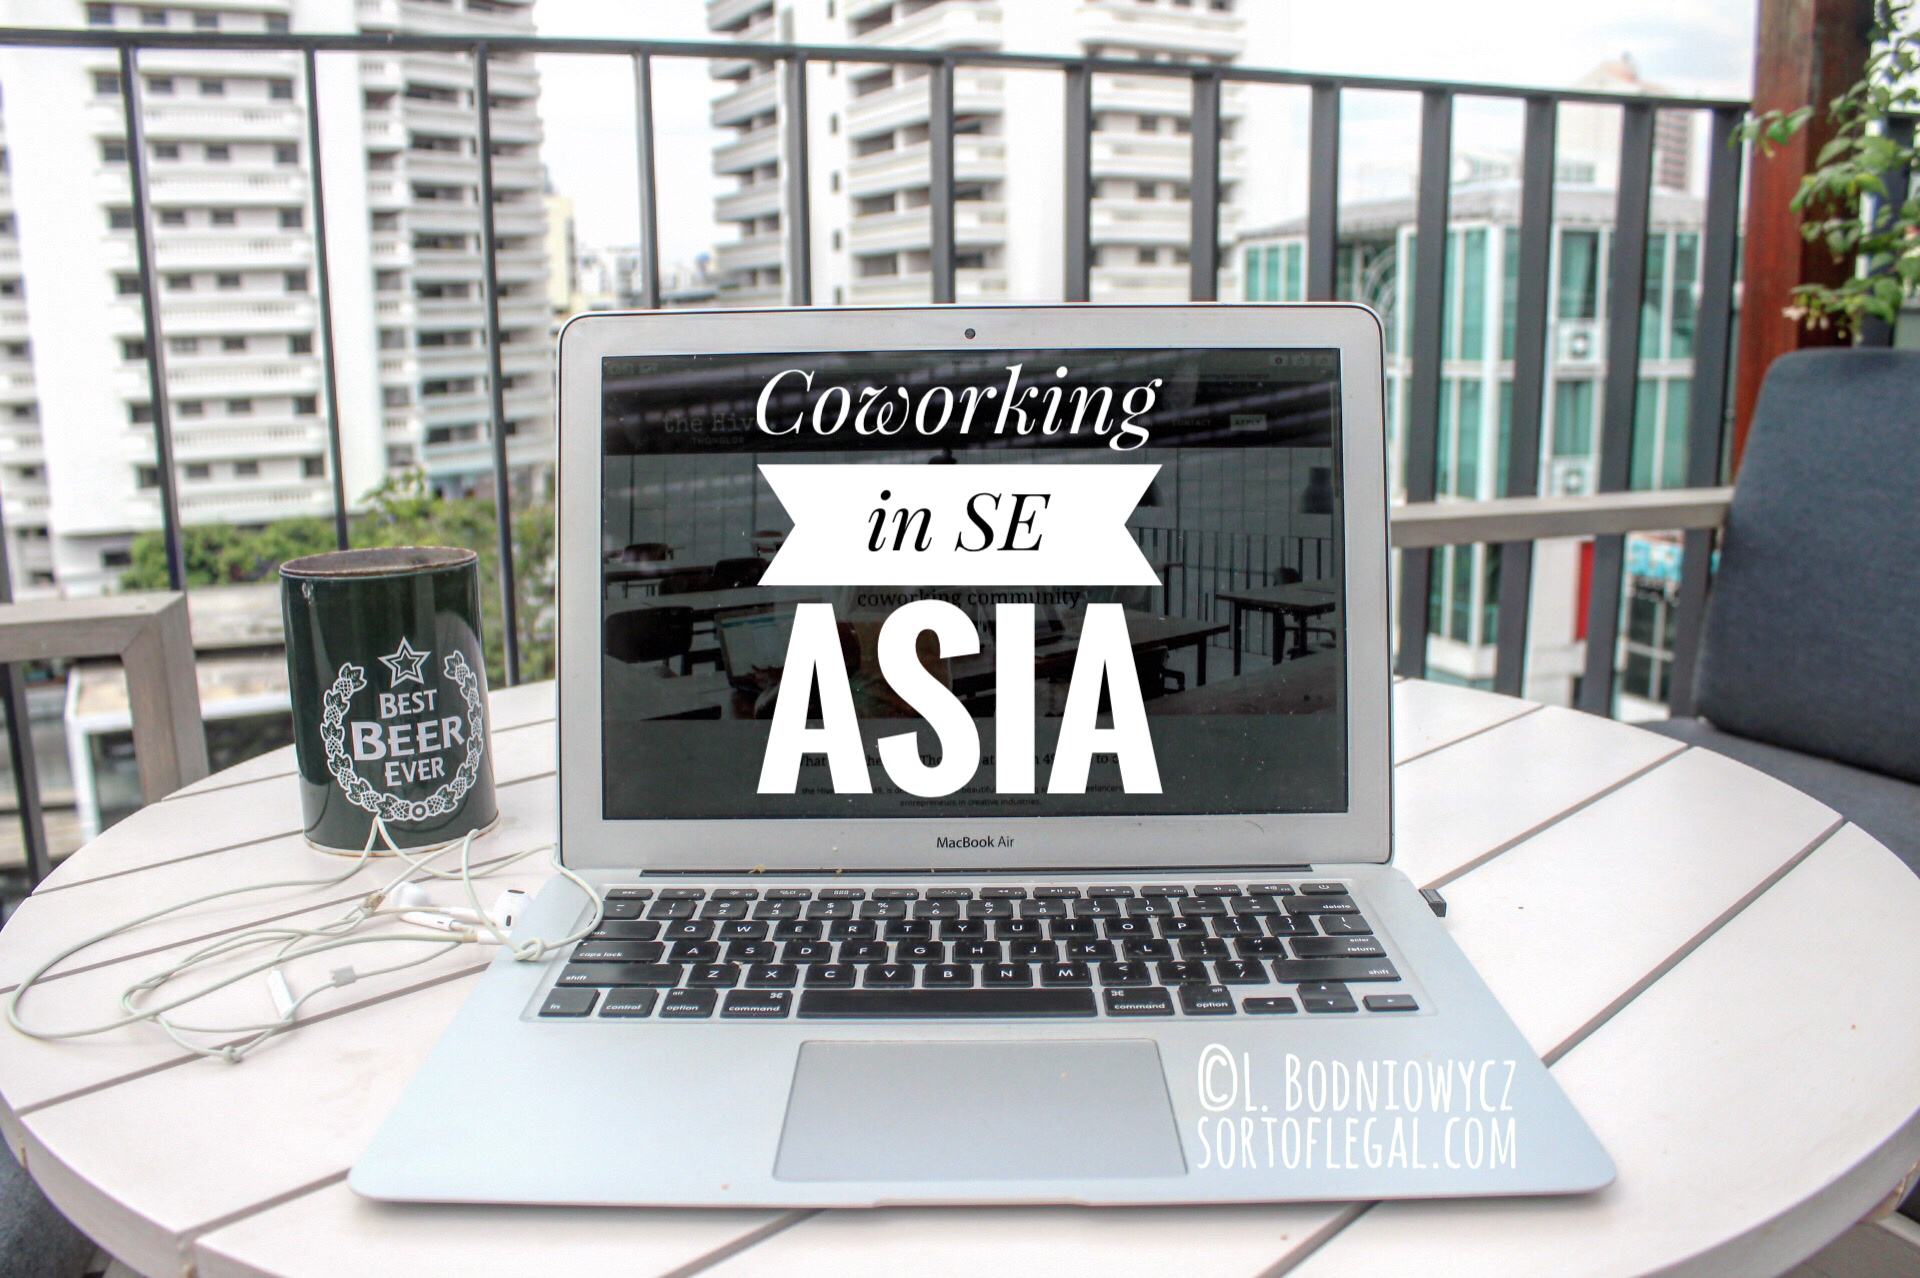 Coworkring in S.E. Asia